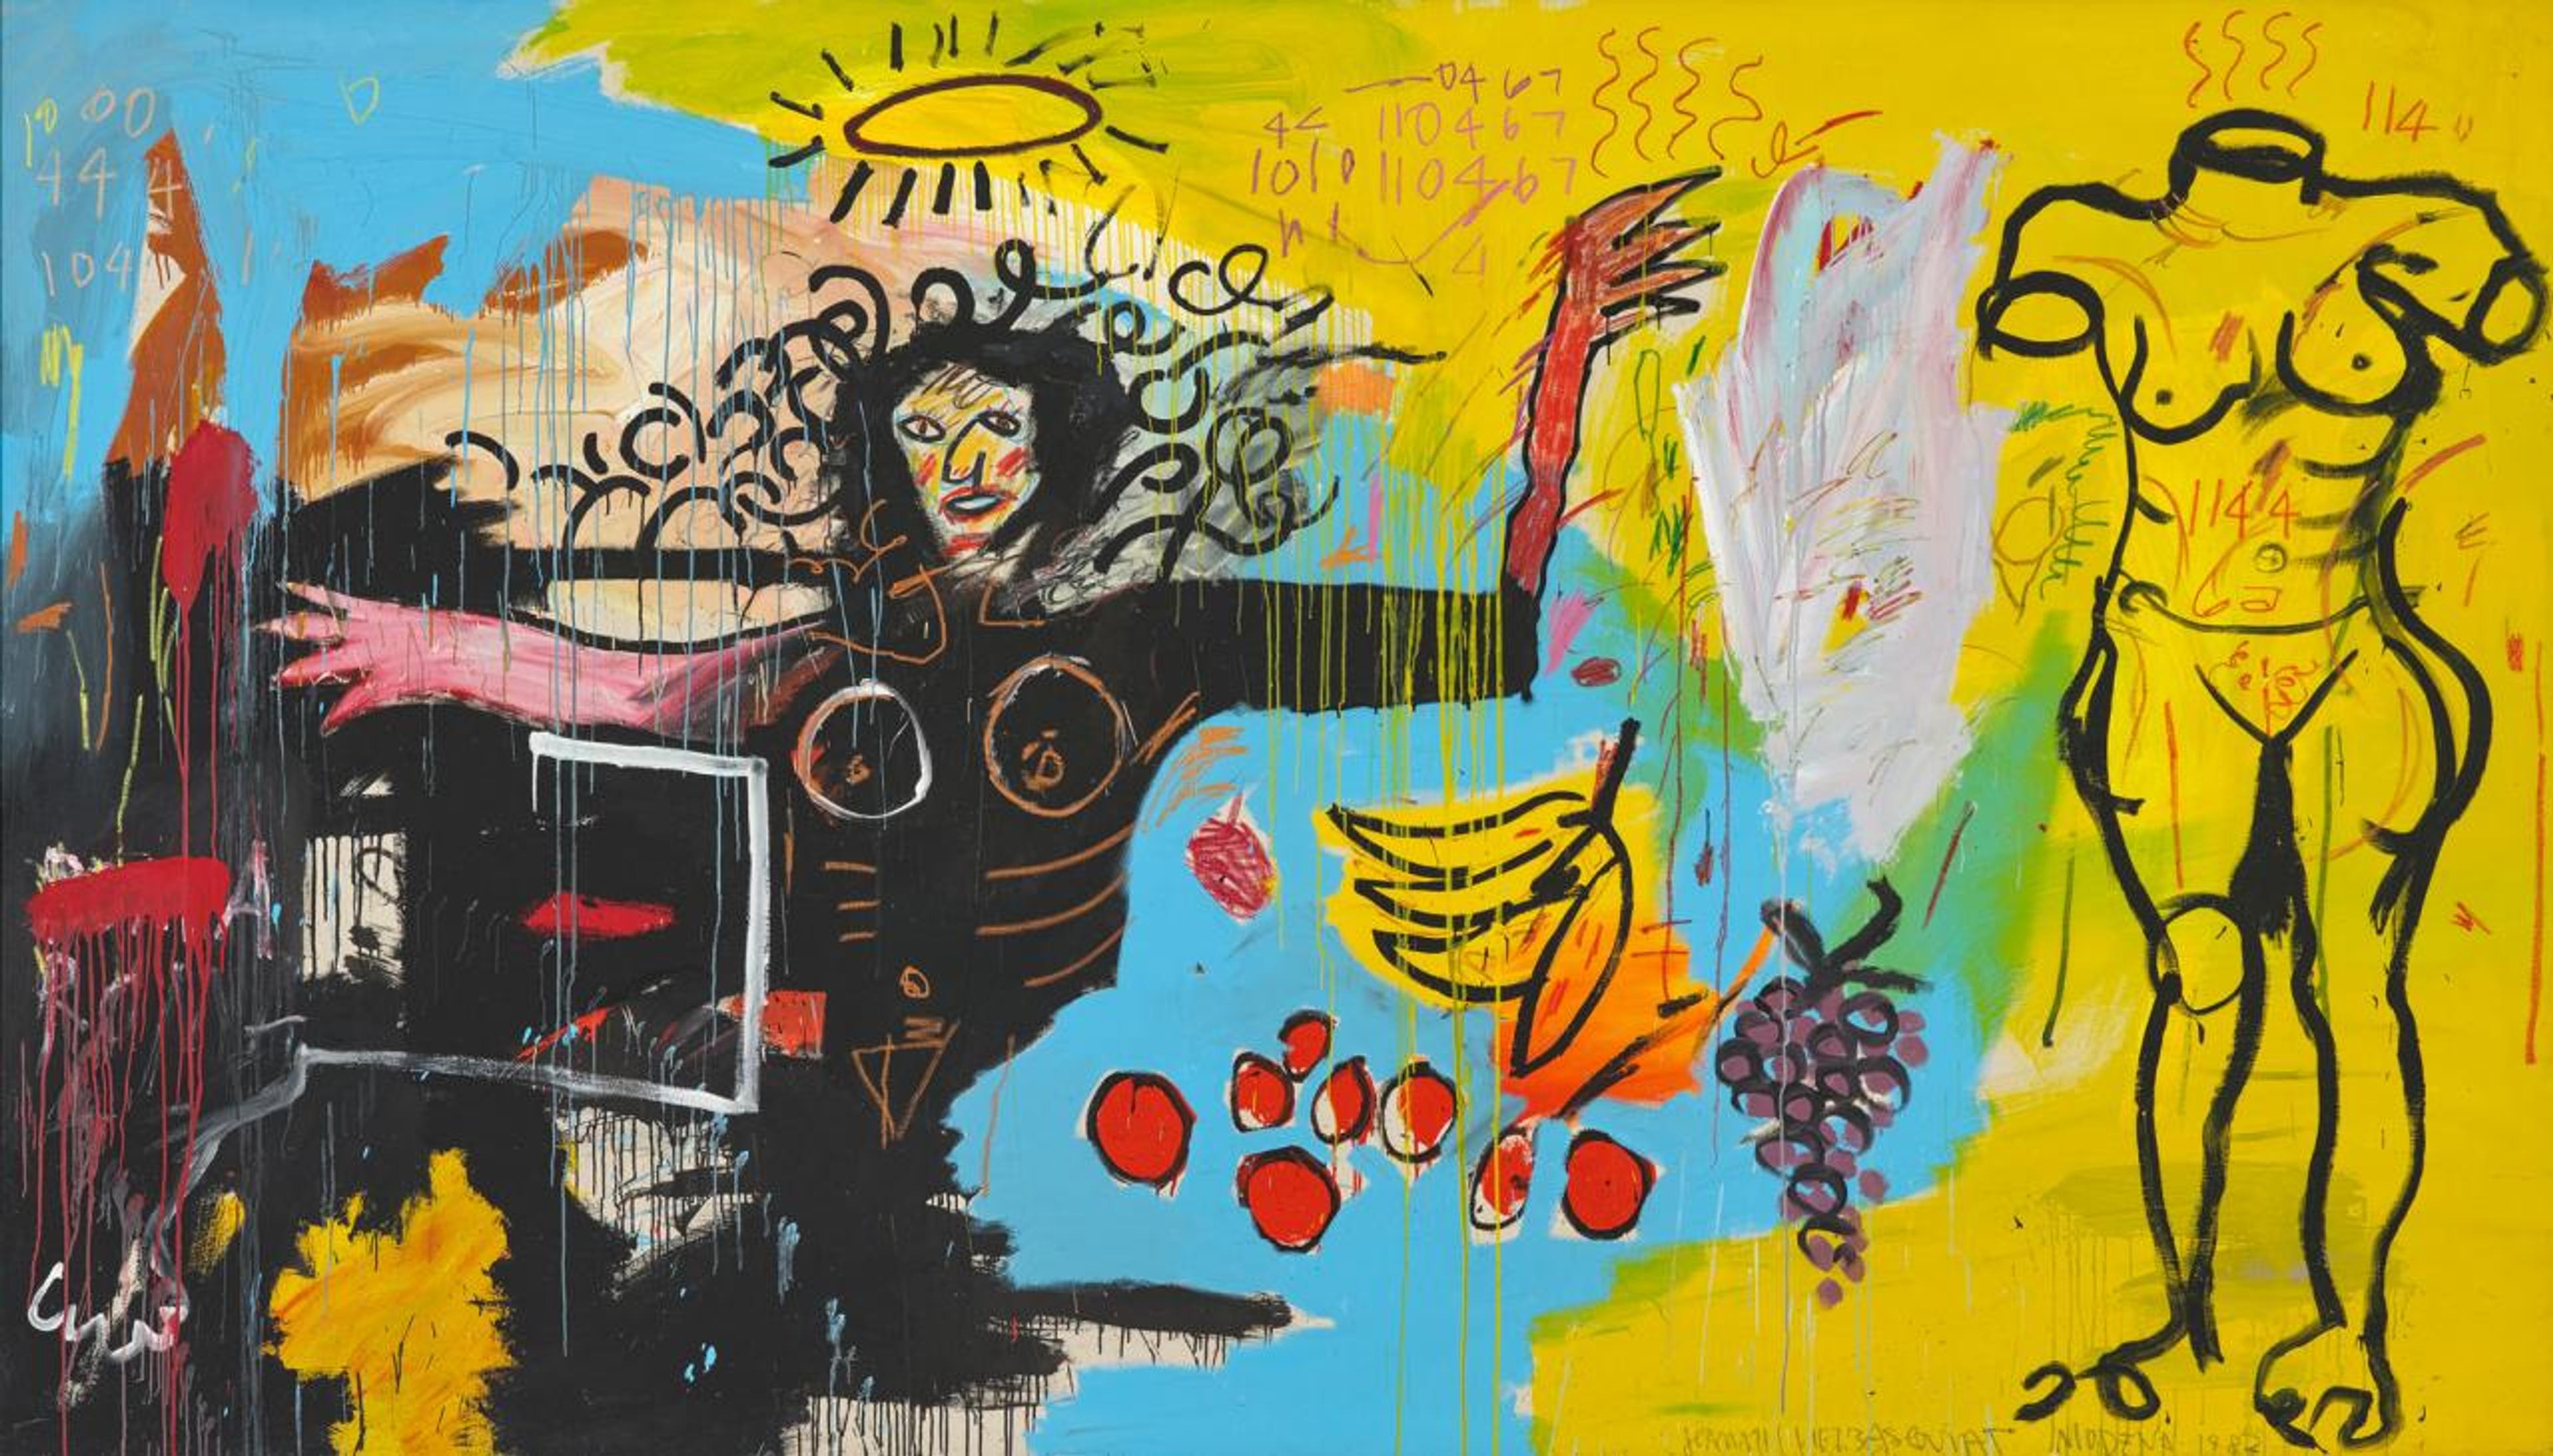 Jean-Michel Basquiat, Untitled (Woman with Roman Torso [Venus]), 1982, acrylic and oil stick on canvas, 241 x 419.5 cm